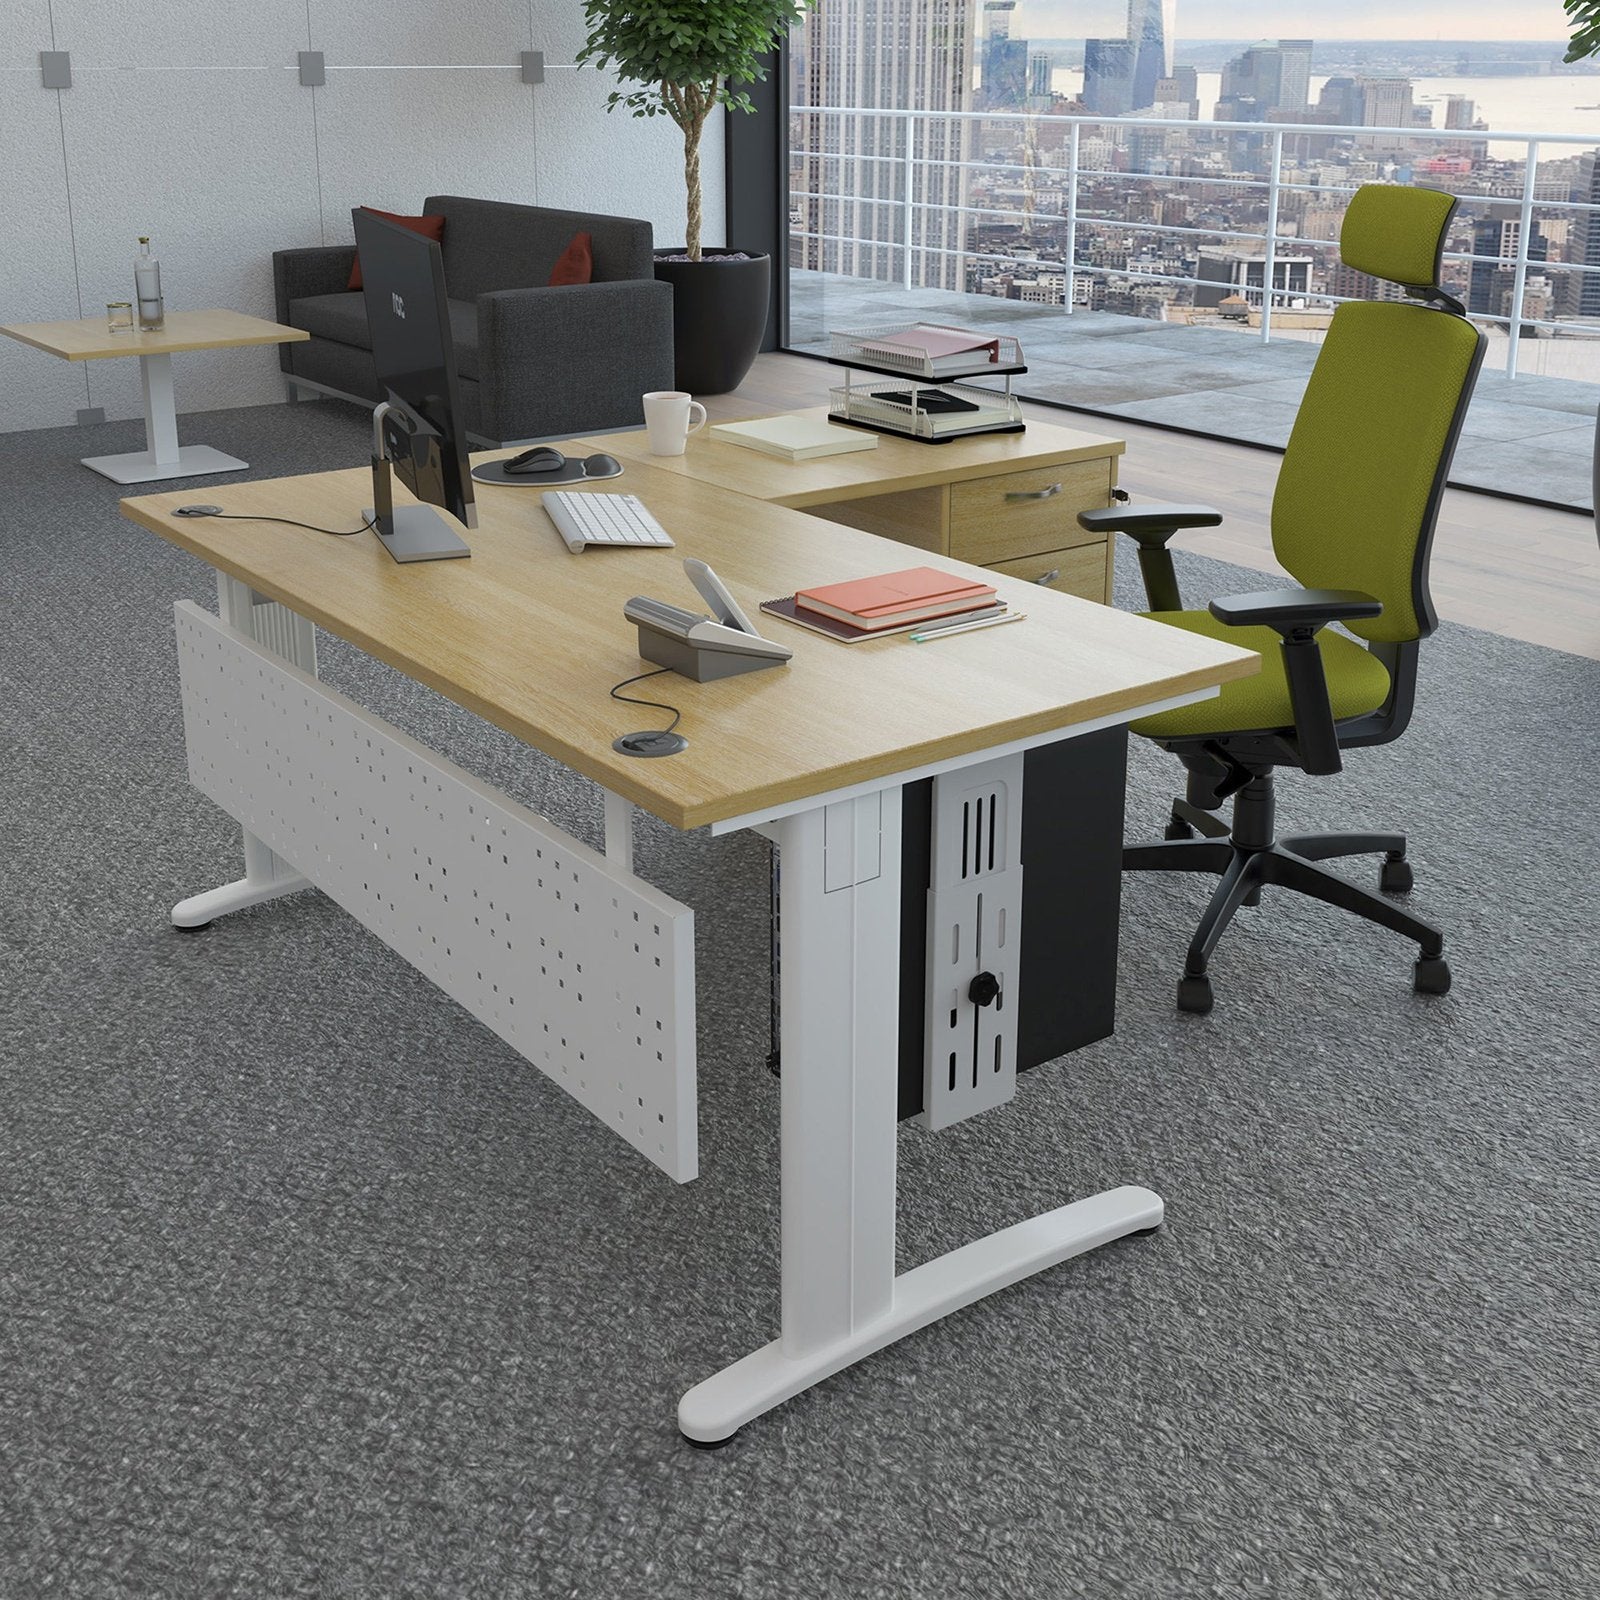 TR10 single return desk 800mm x 600mm - Office Products Online